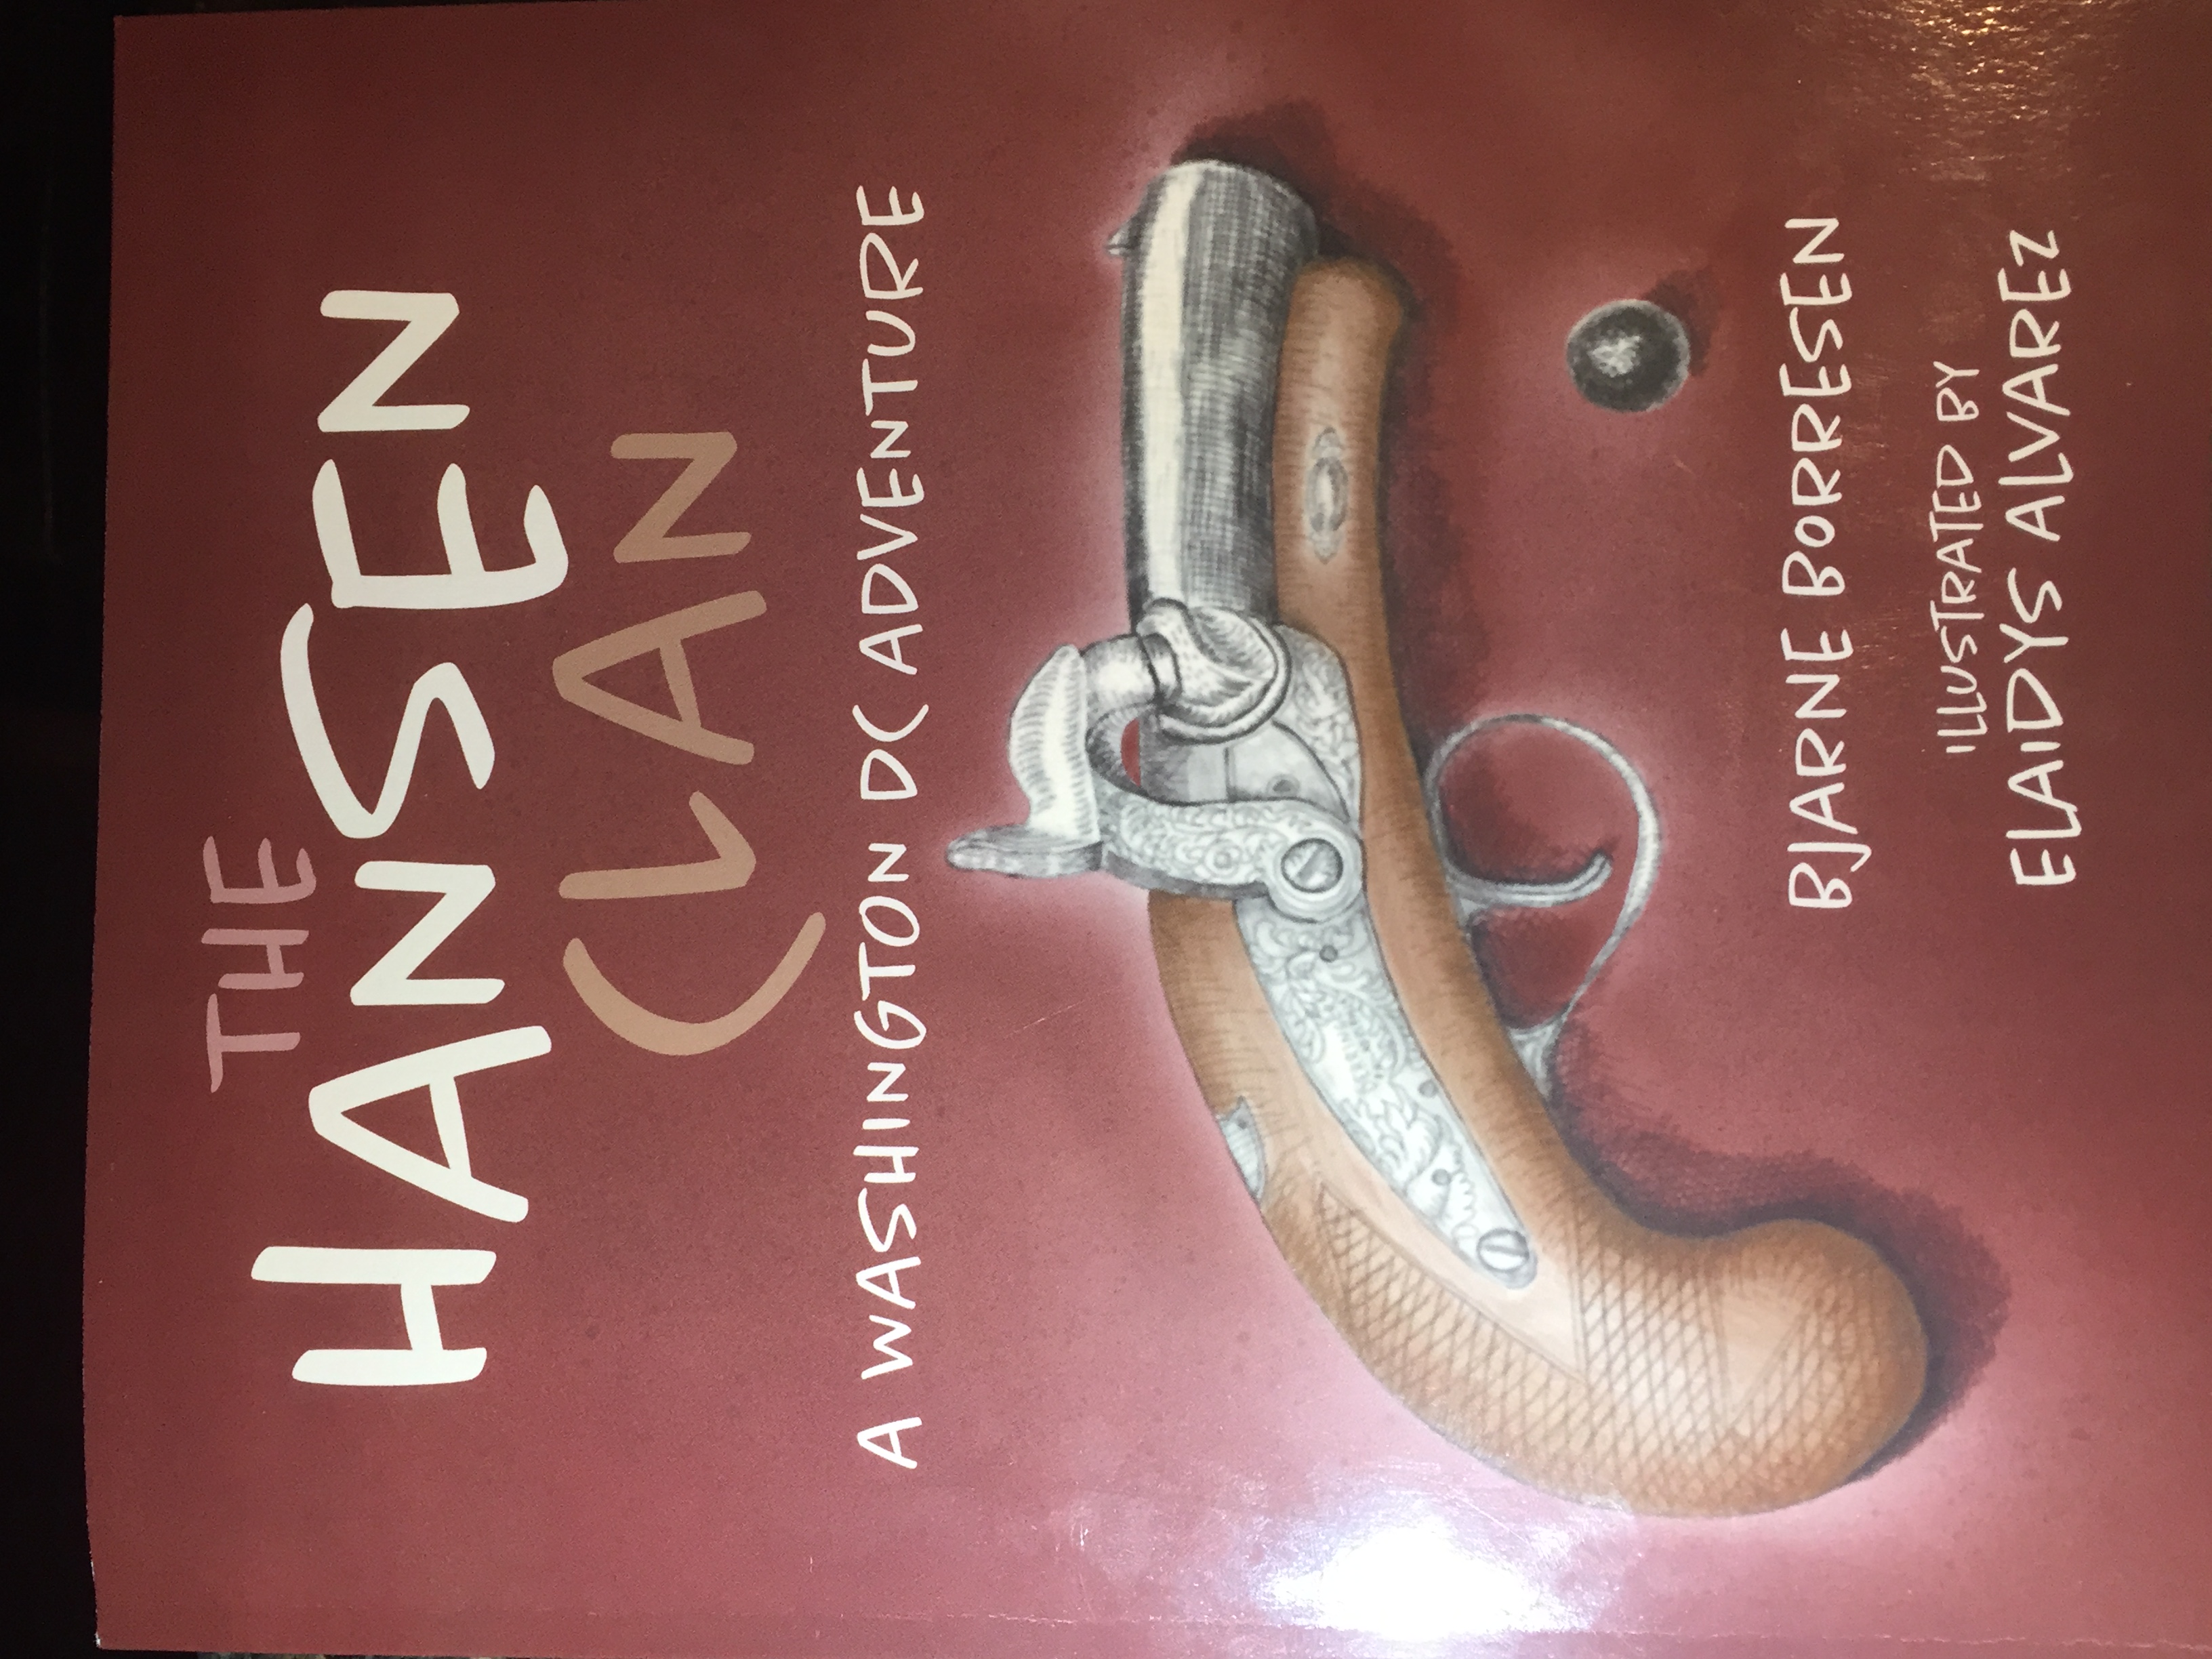 The Hansen Clan: A Washington DC Adventure - book author Bjarne